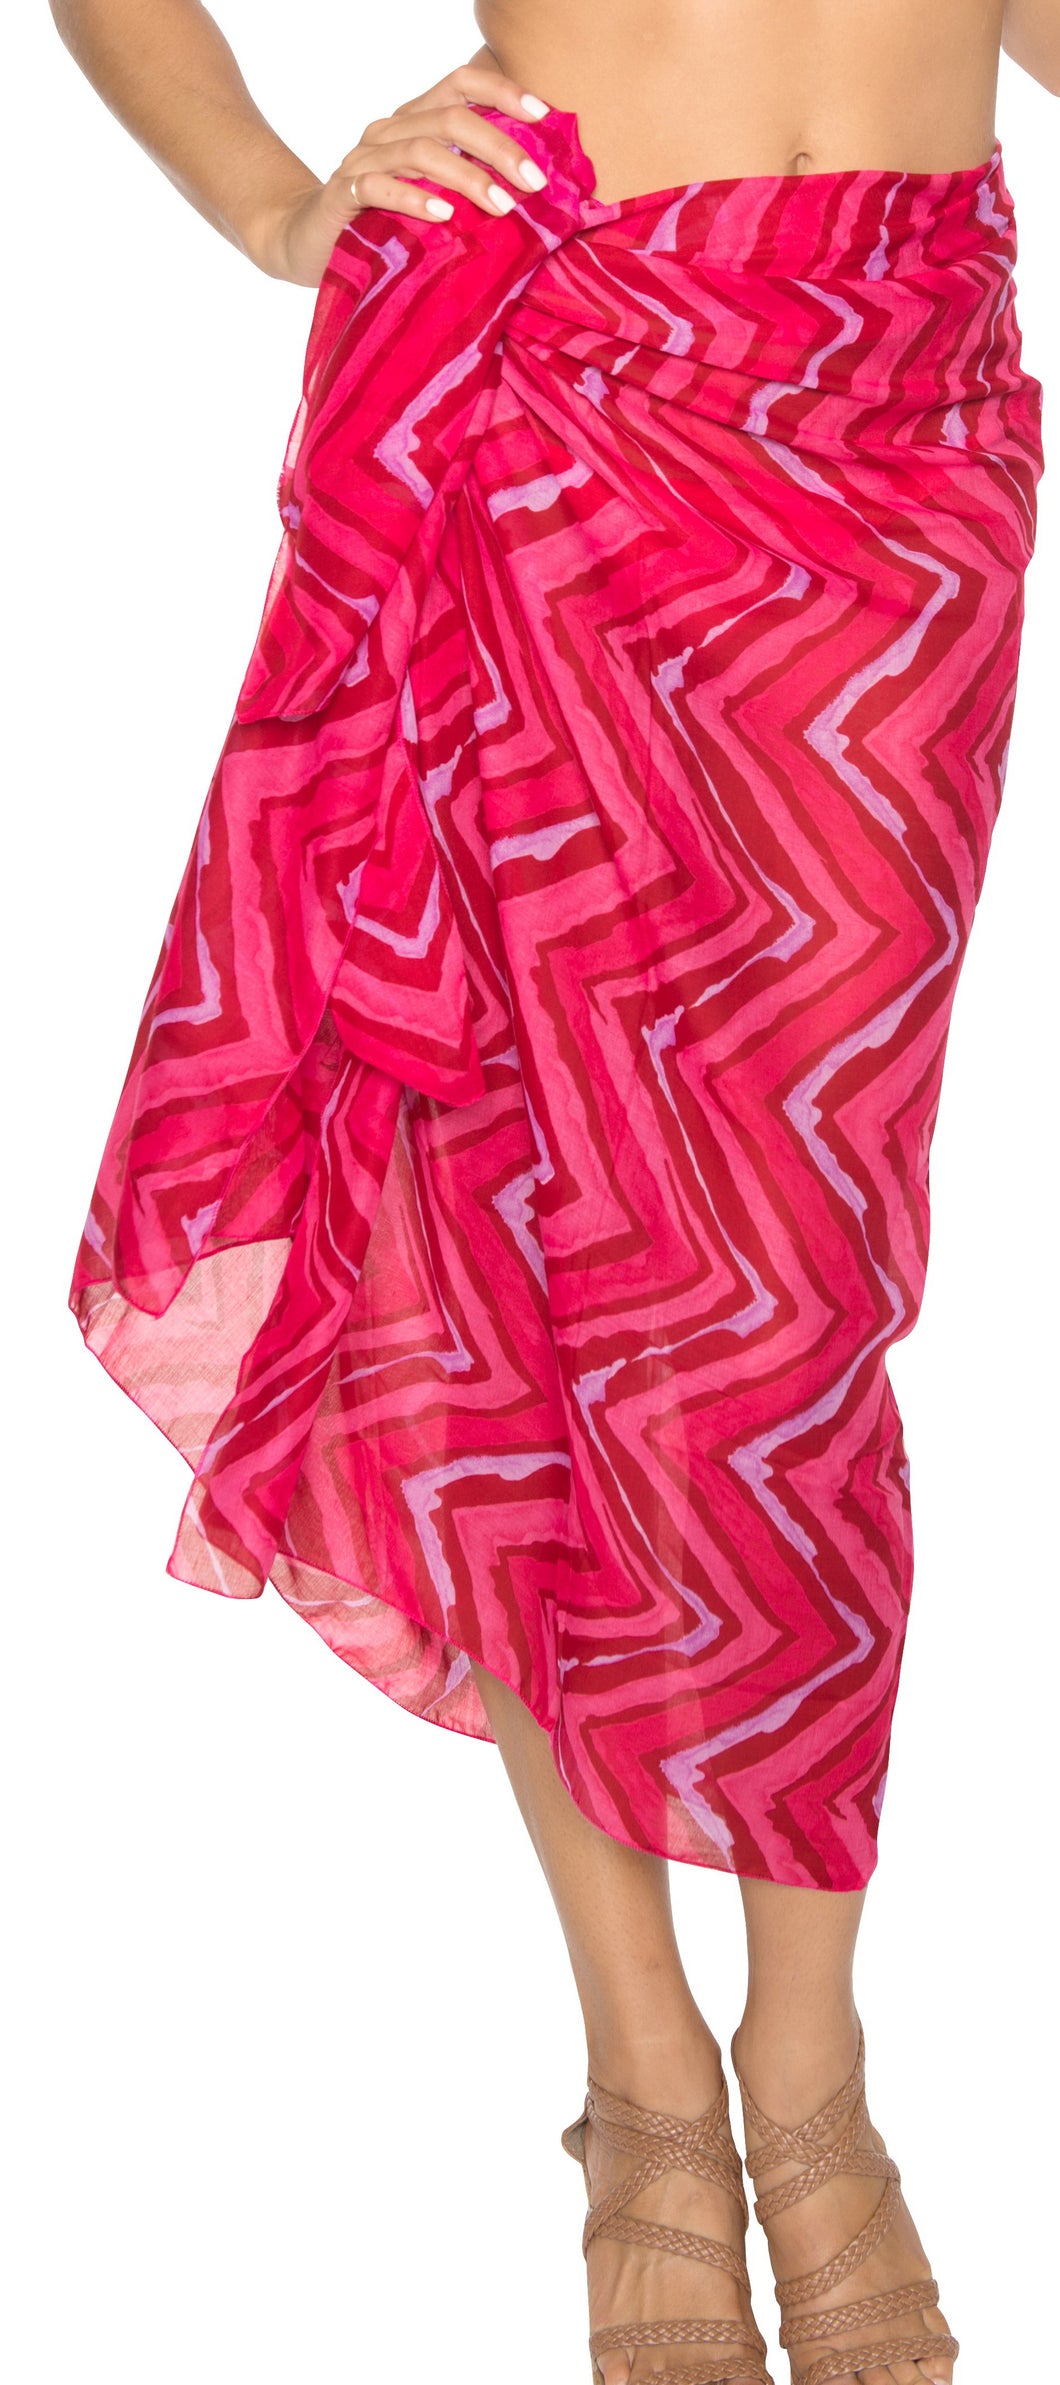 LA LEELA Women Sarong Swimsuit Tie Cover Up Wrap Beach Dress One Size Pink_U581